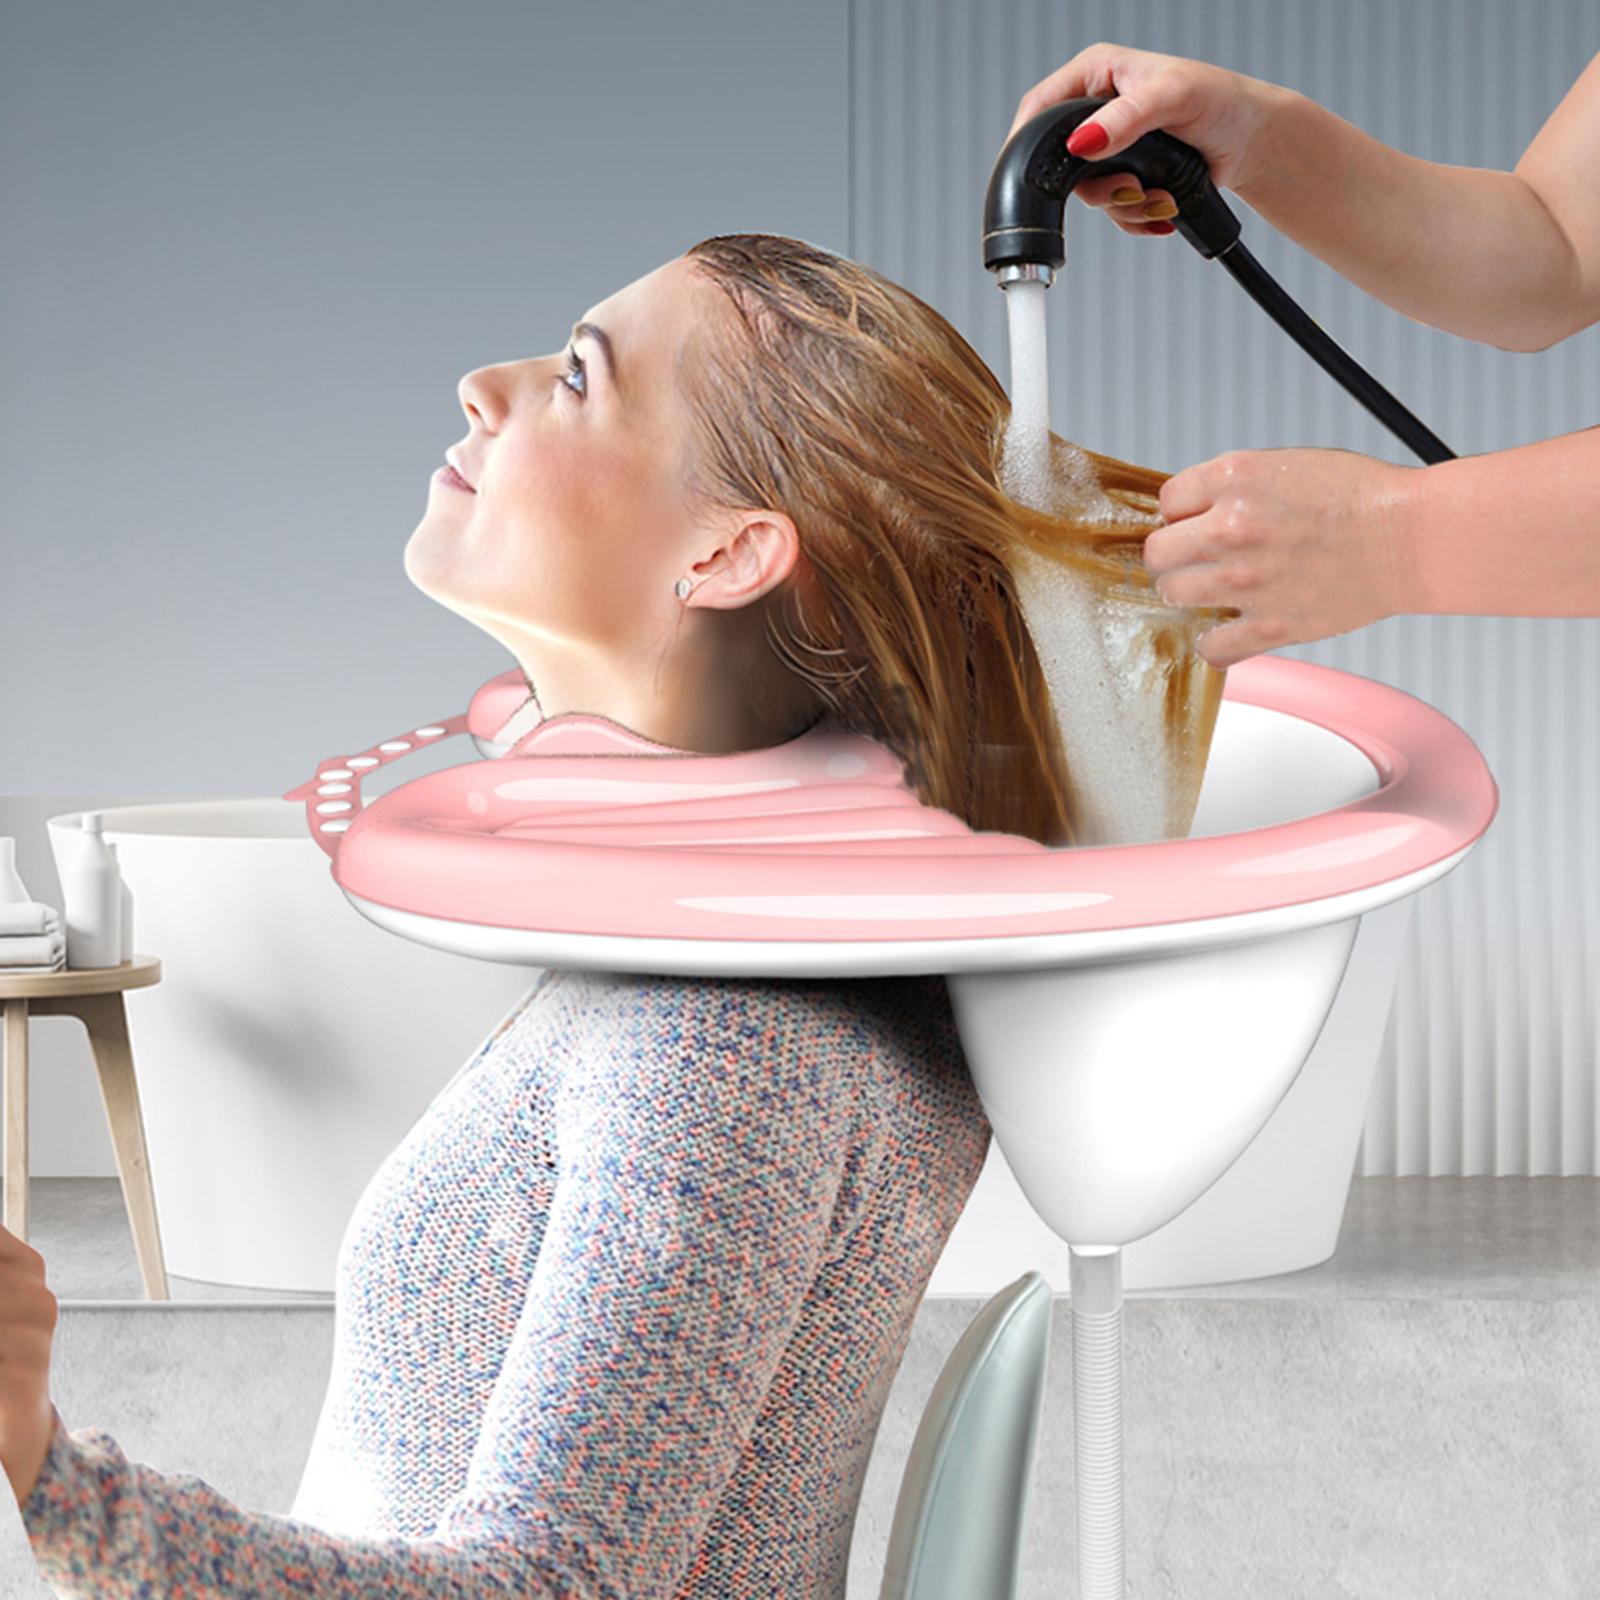 

Organization Inflatable Hair Washing Basin with Drain Tube Portable PVC Foldable Shampoo Basin Tray for Pregnant Disabled Injured Elderly